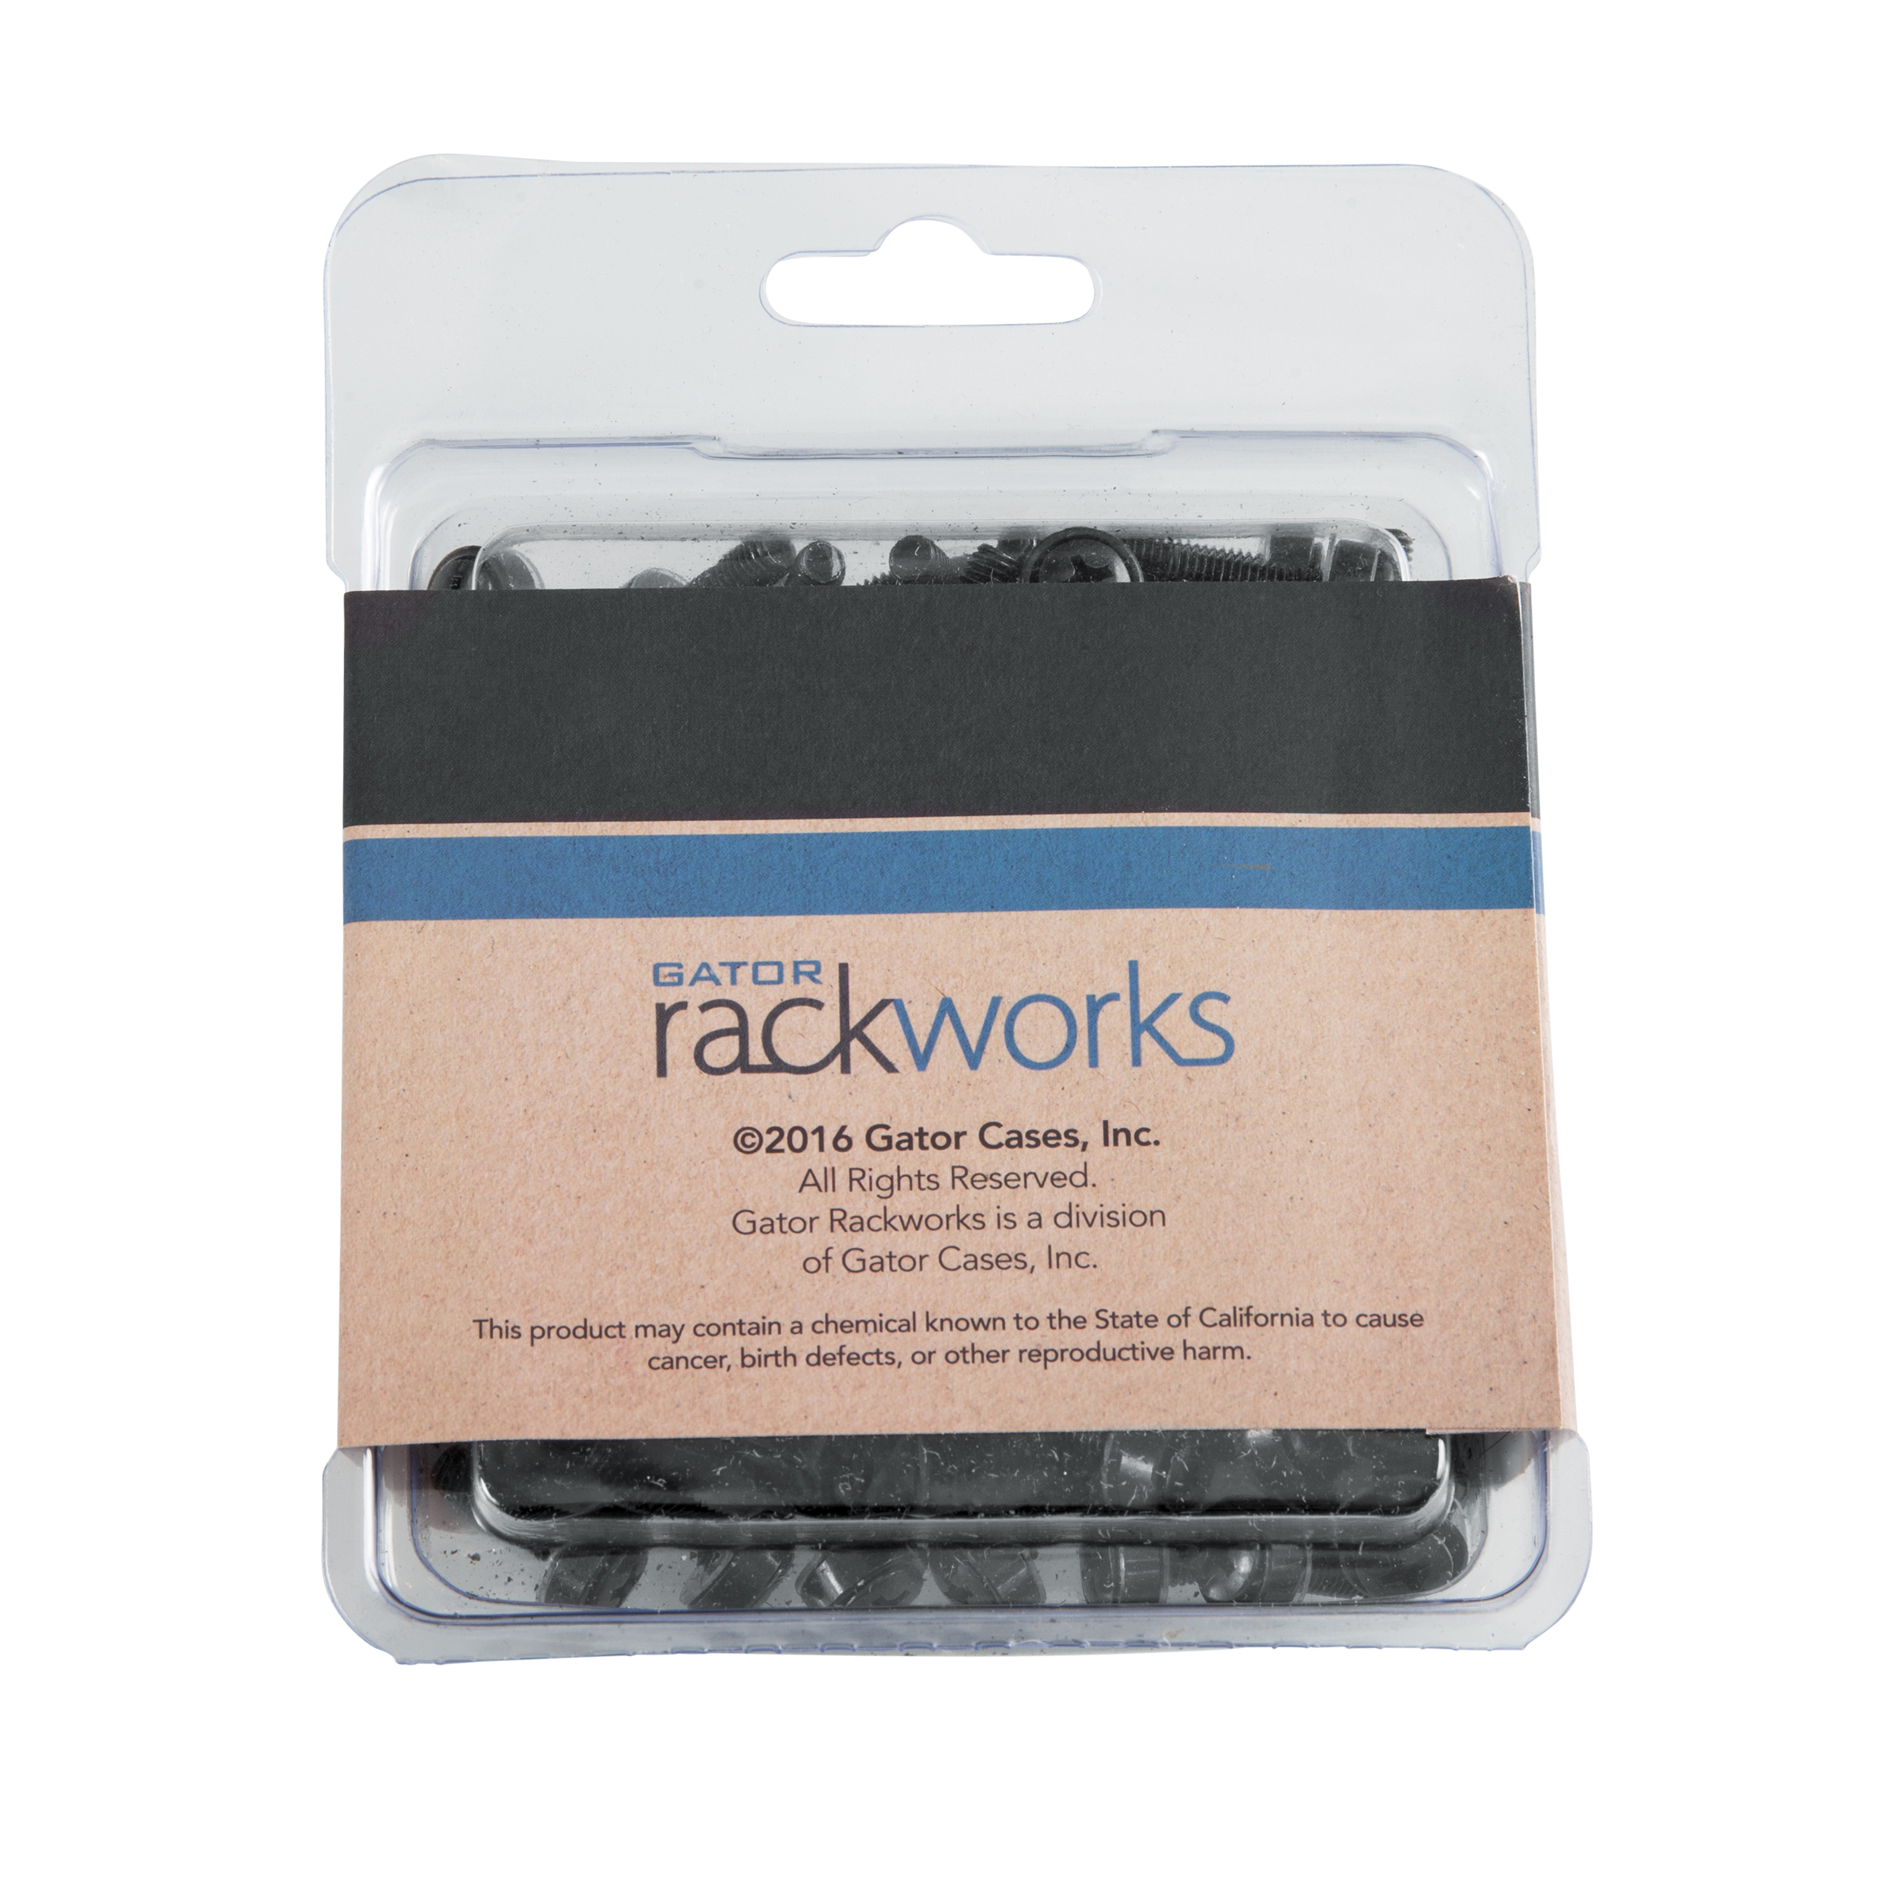 Rack Screws – 100 Pack-GRW-SCRW100